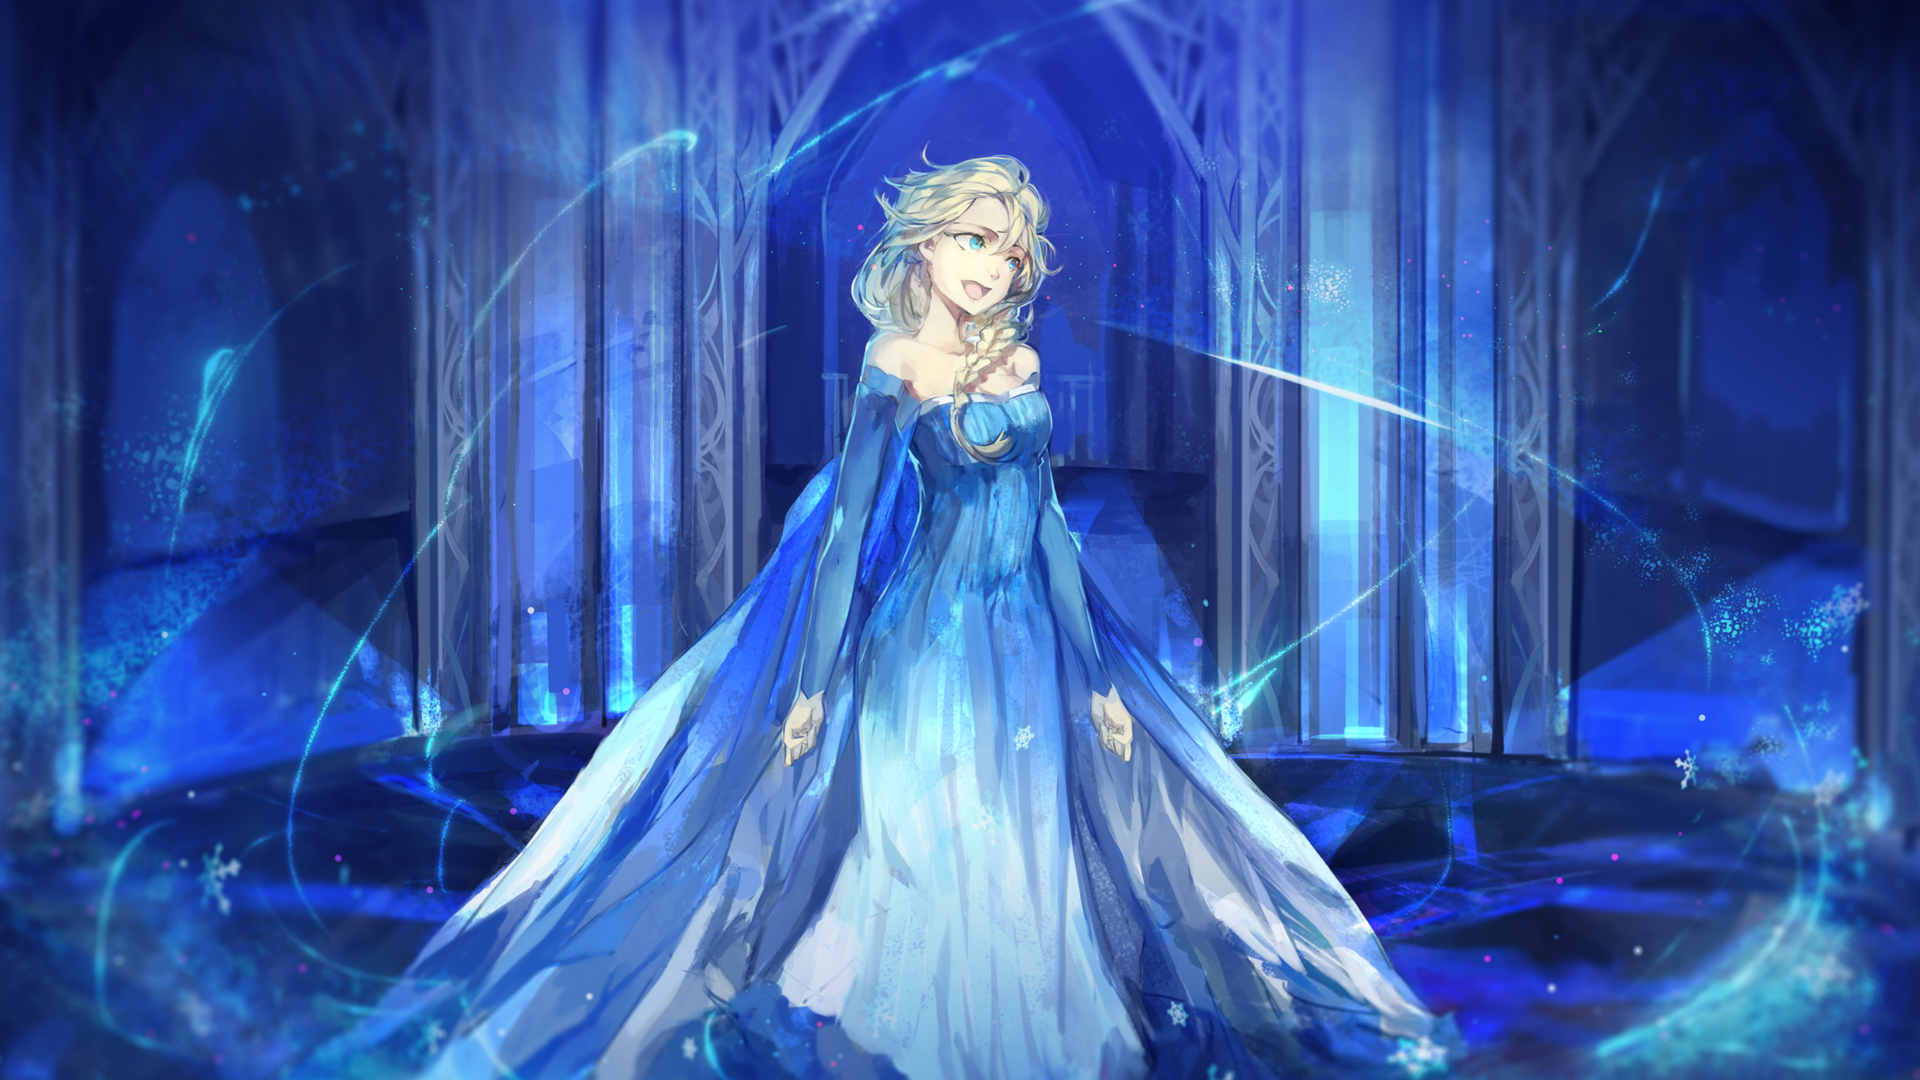 Anime Anime Girls Princess Dress Blue Dress Fantasy Girl Elsa Frozen Movie 1920x1080